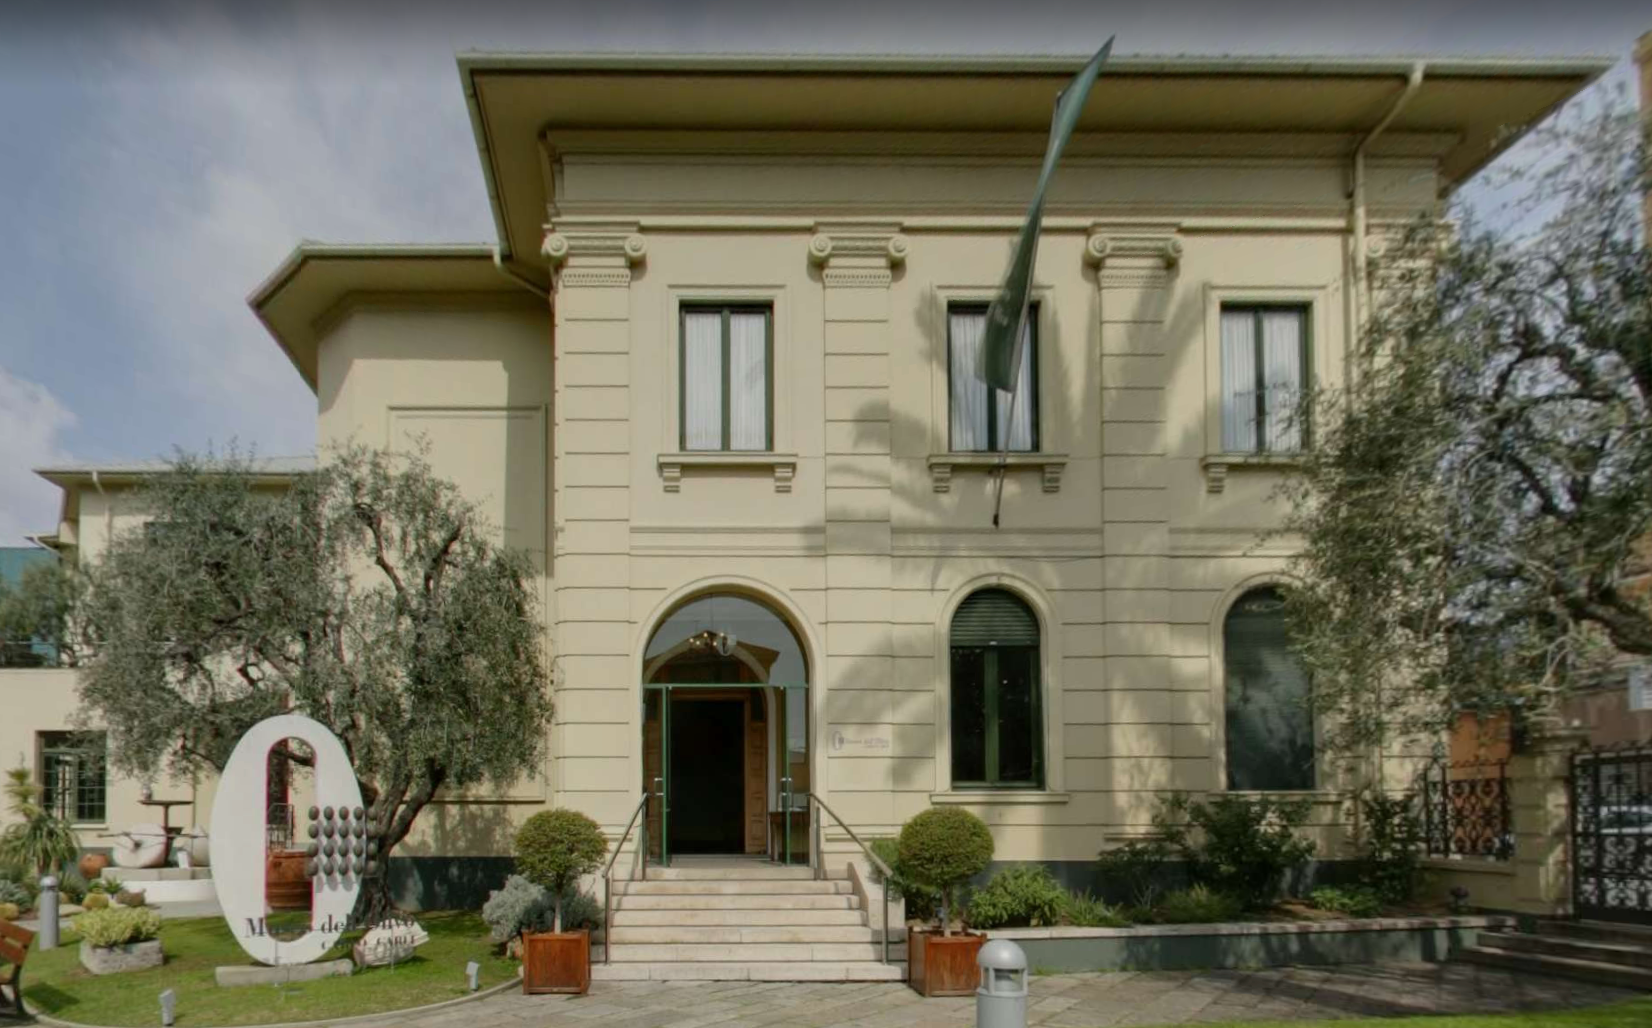 Museo dell’Olivo Carlo Carli by Google Earth